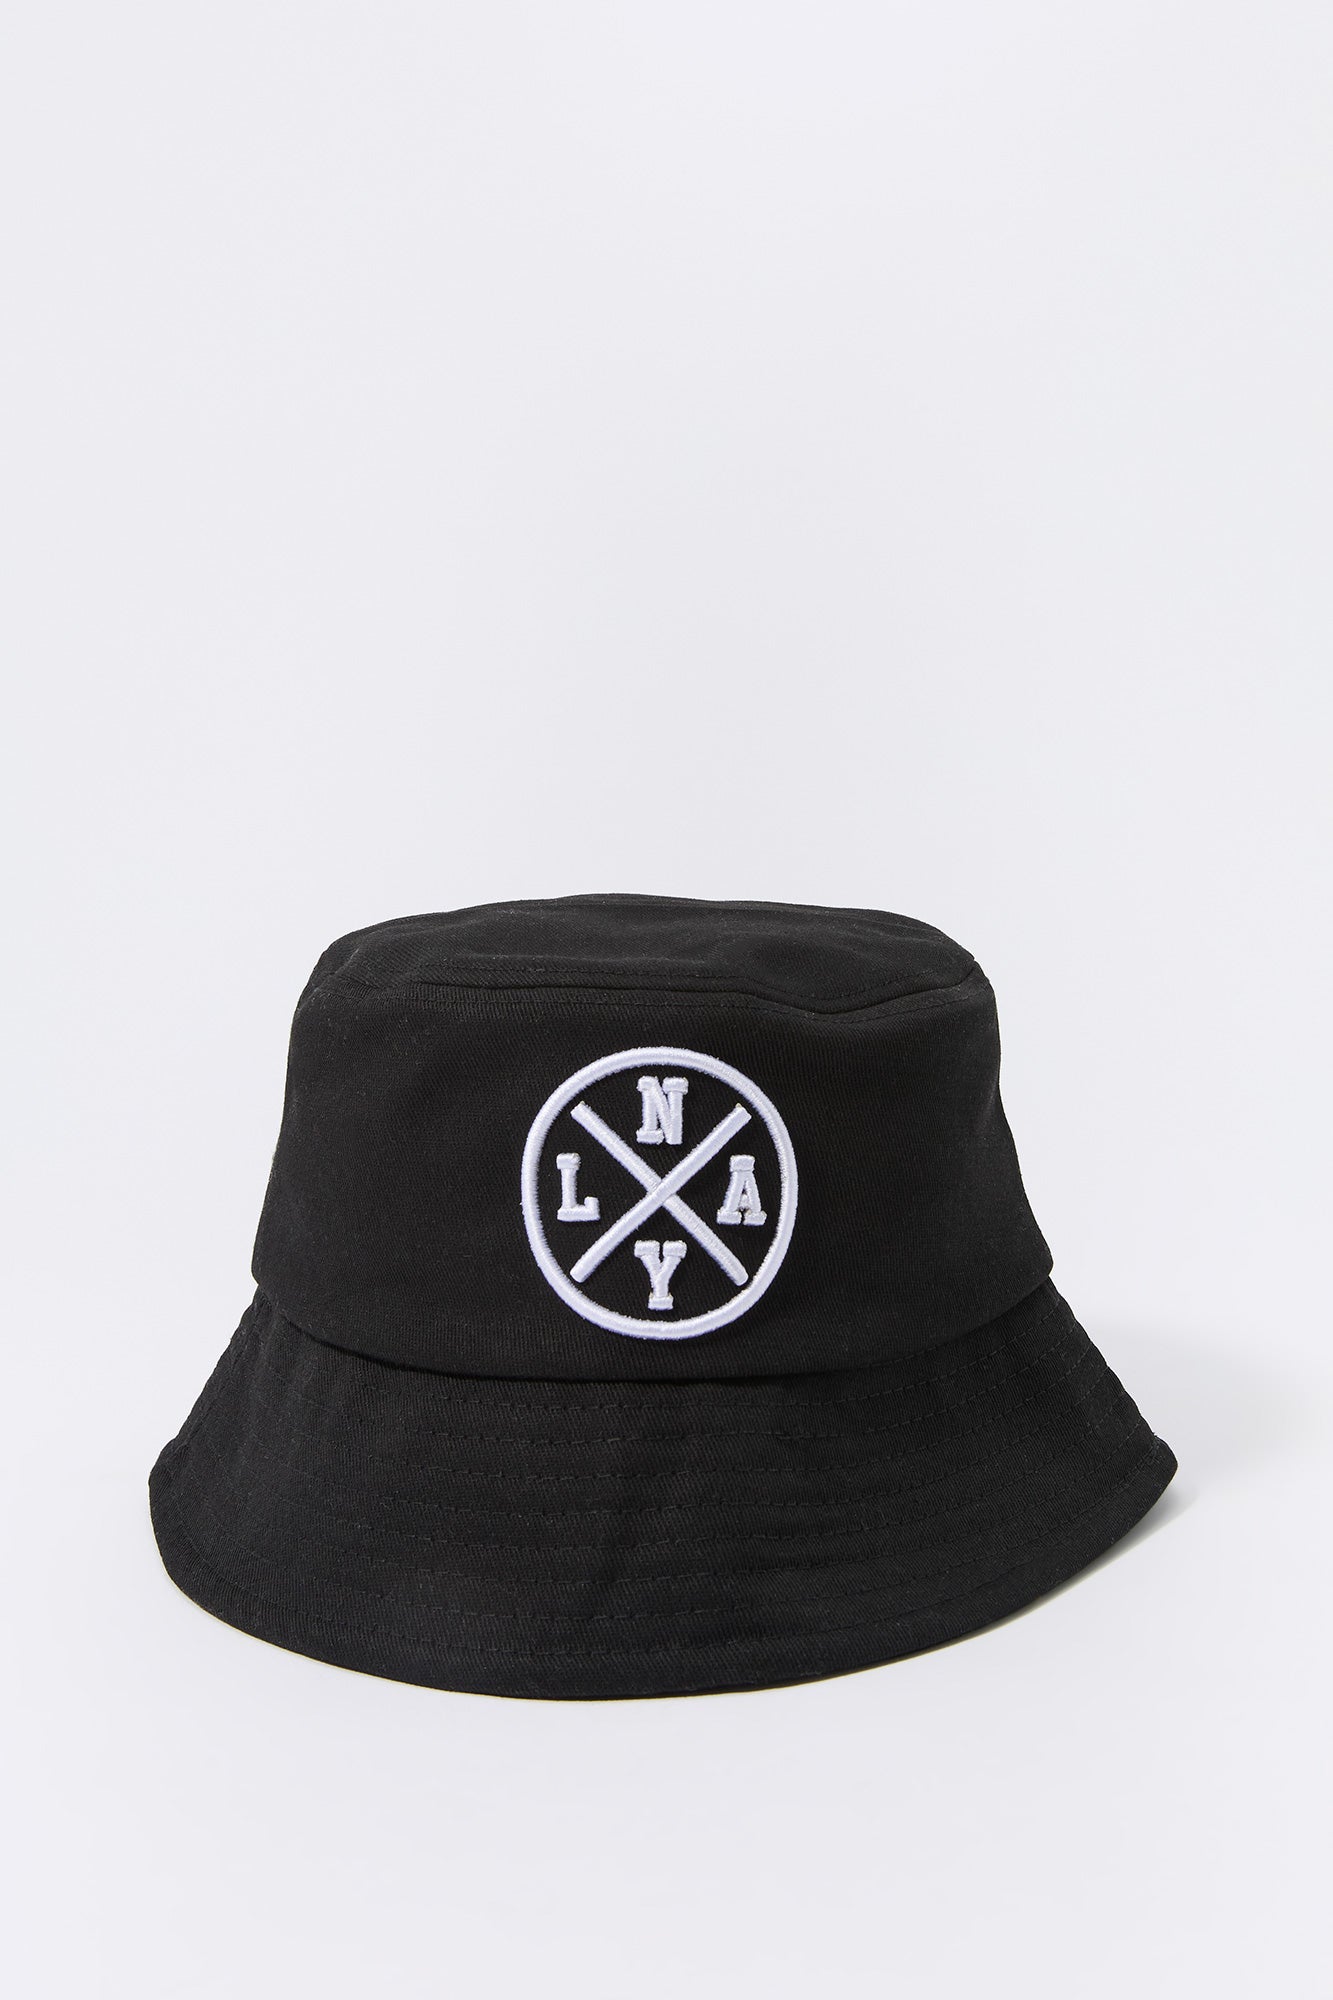 LA NY Embroidered Bucket Hat